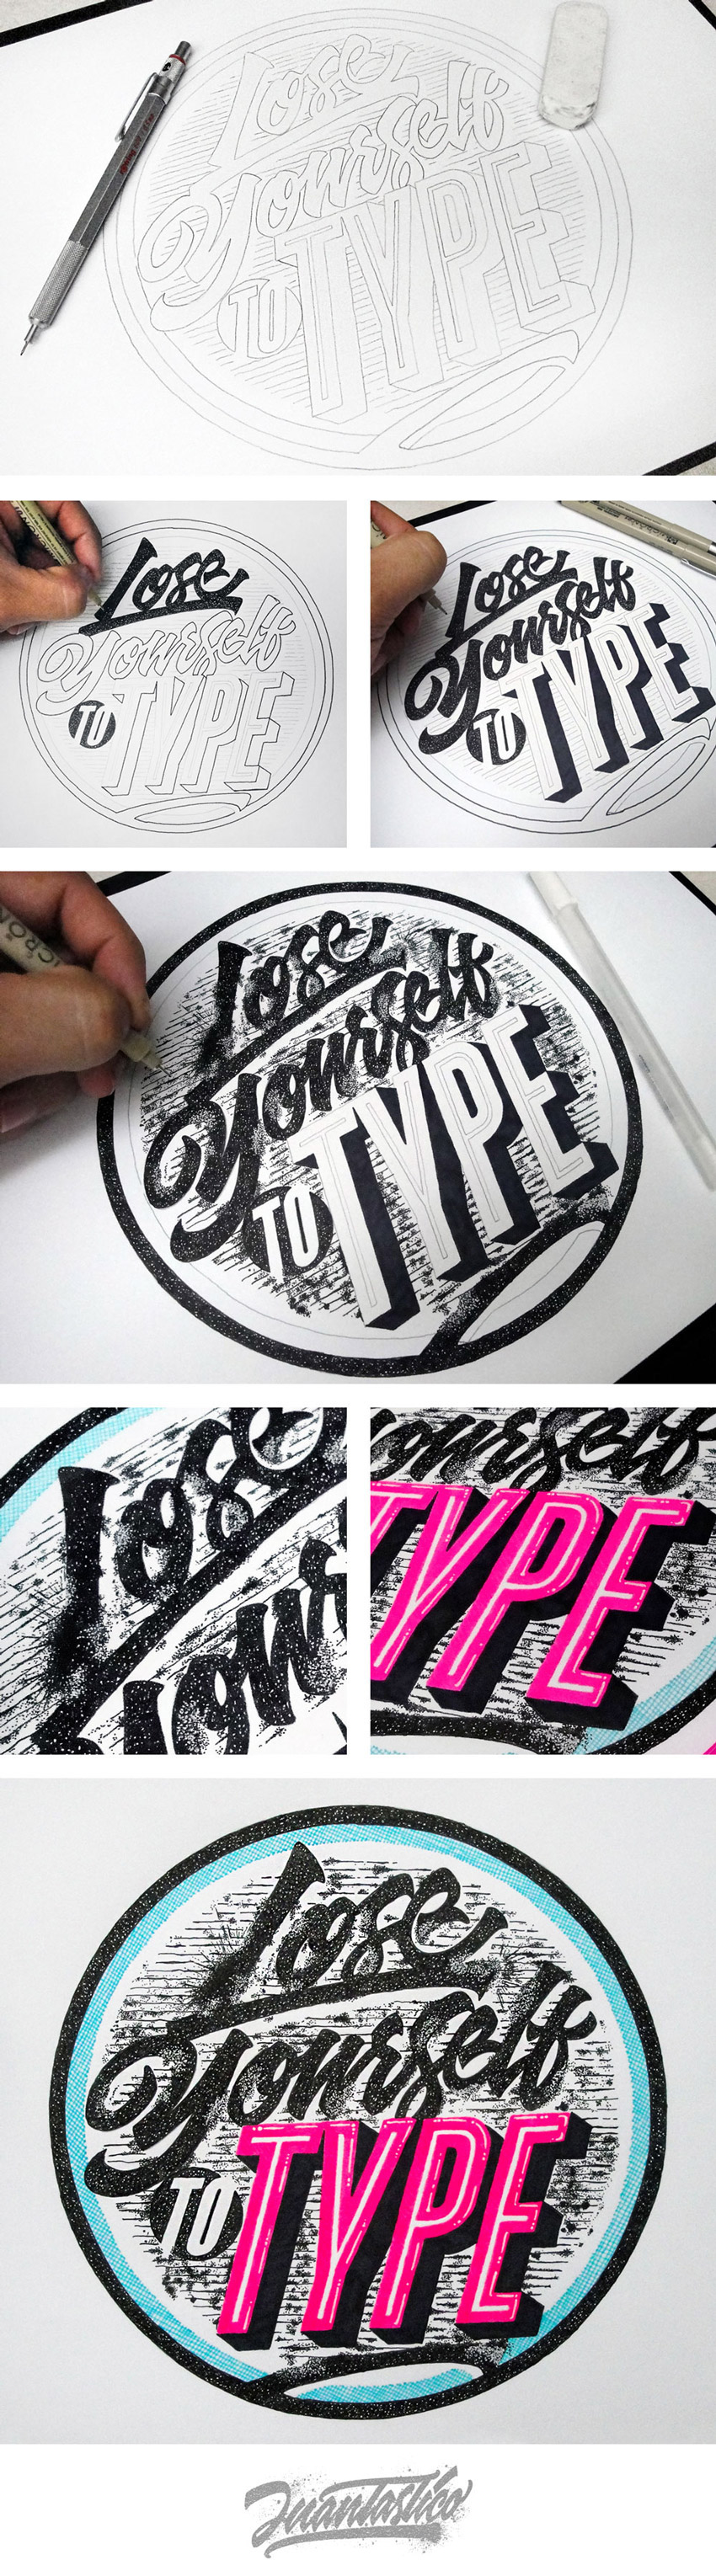 #typography #type #typographyart #graphicart #illustration #Design #art #inspiration